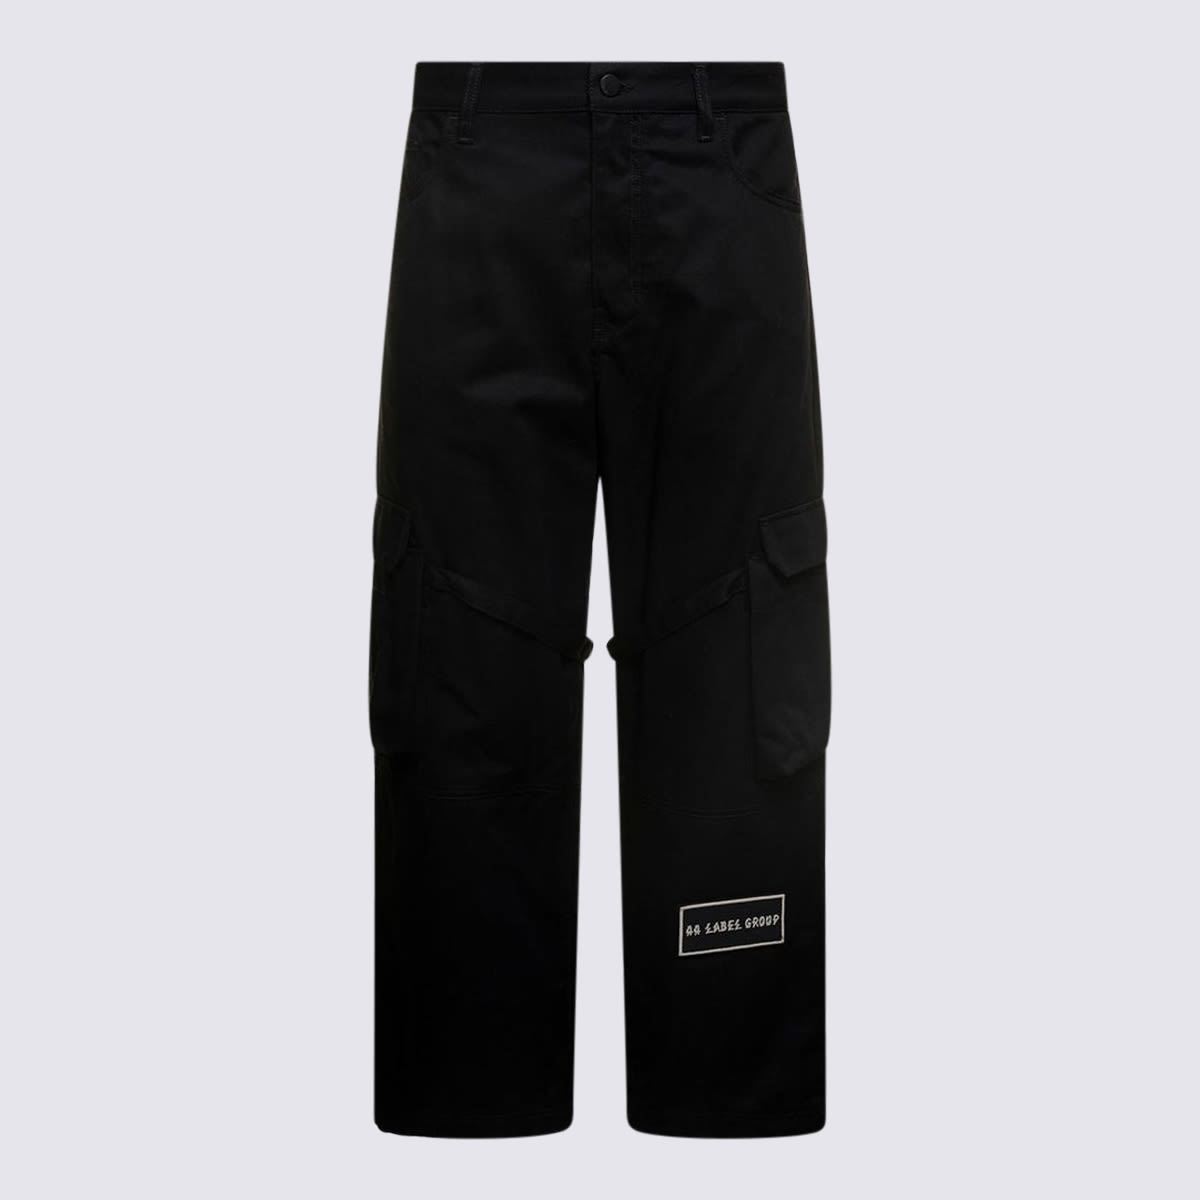 Shop 44 Label Group Black And White Cotton Cargo Pants